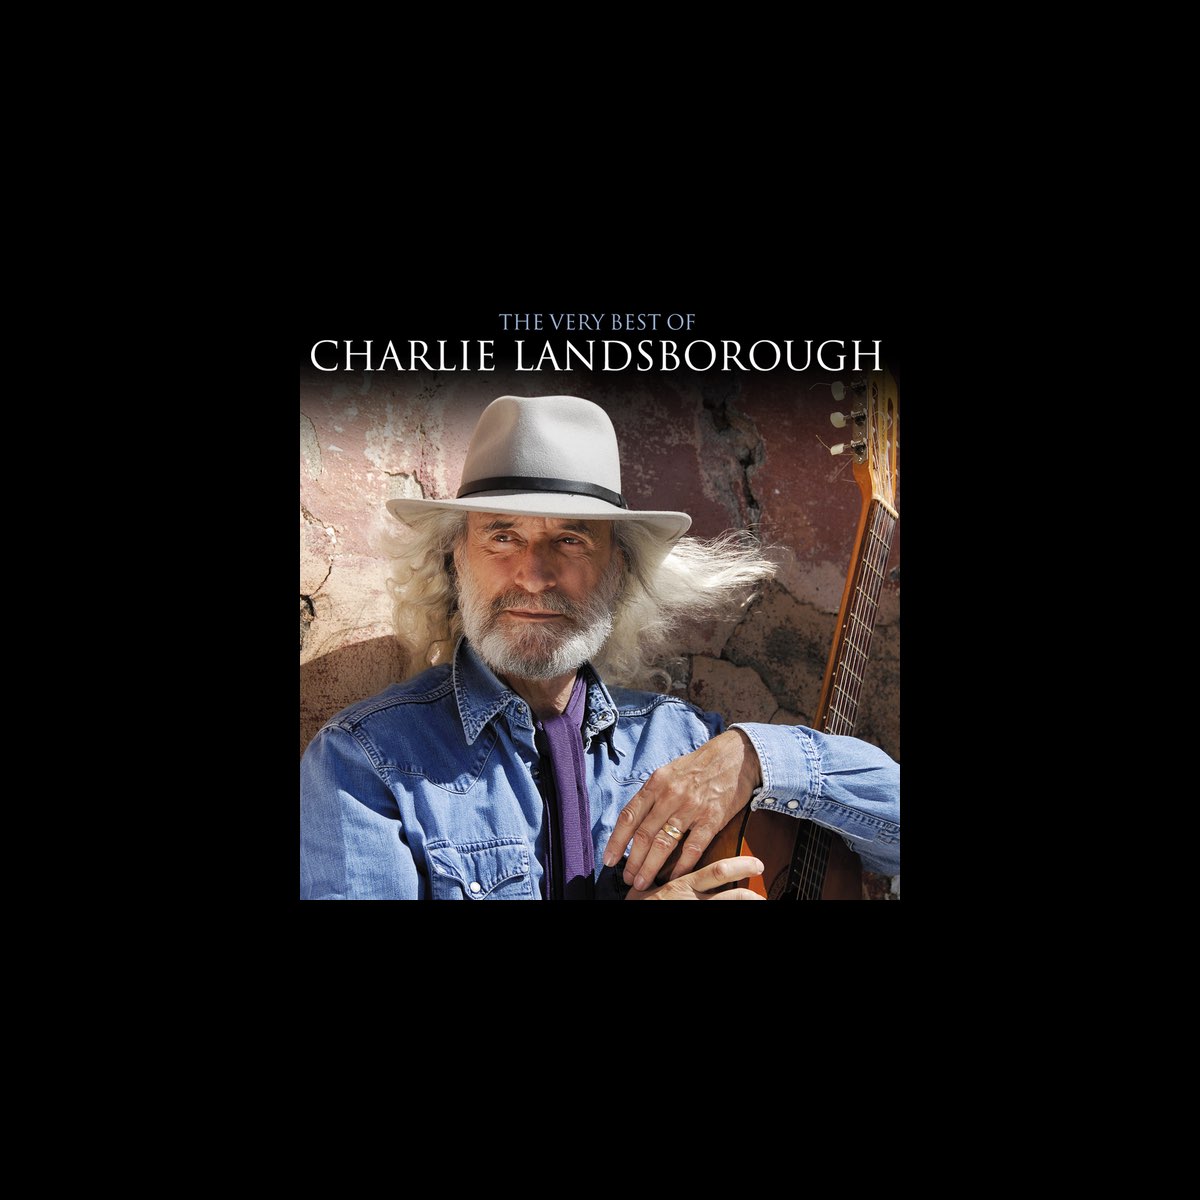 The Very Best Of Charlie Landsborough By Charlie Landsborough On Apple Music